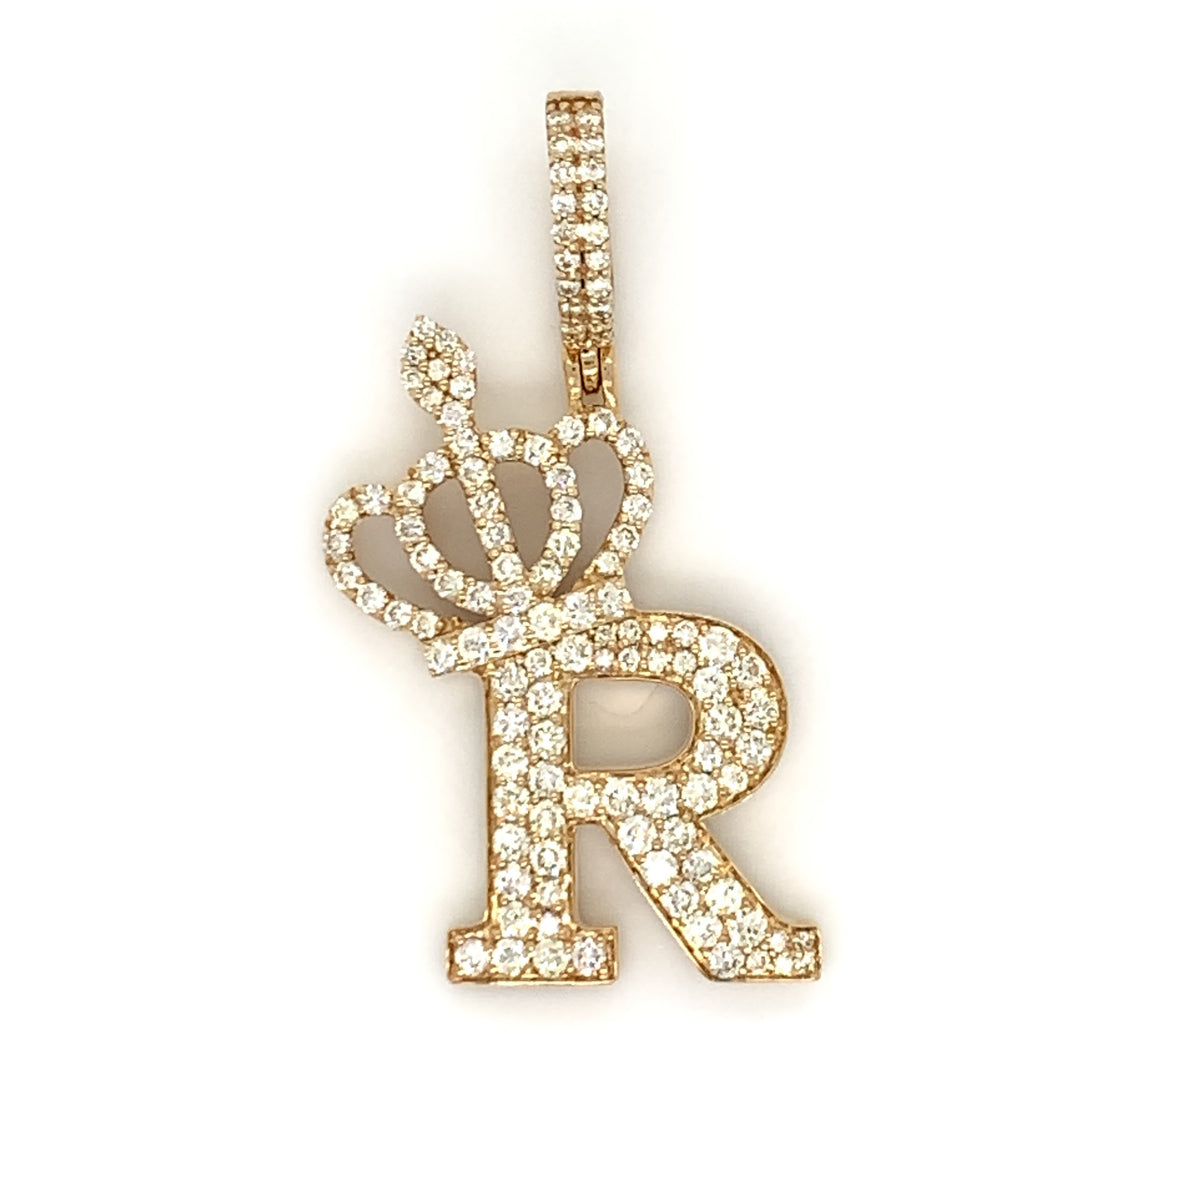 1.30 CT. Diamond Initial "R" Pendant in 10K Gold - White Carat - USA & Canada